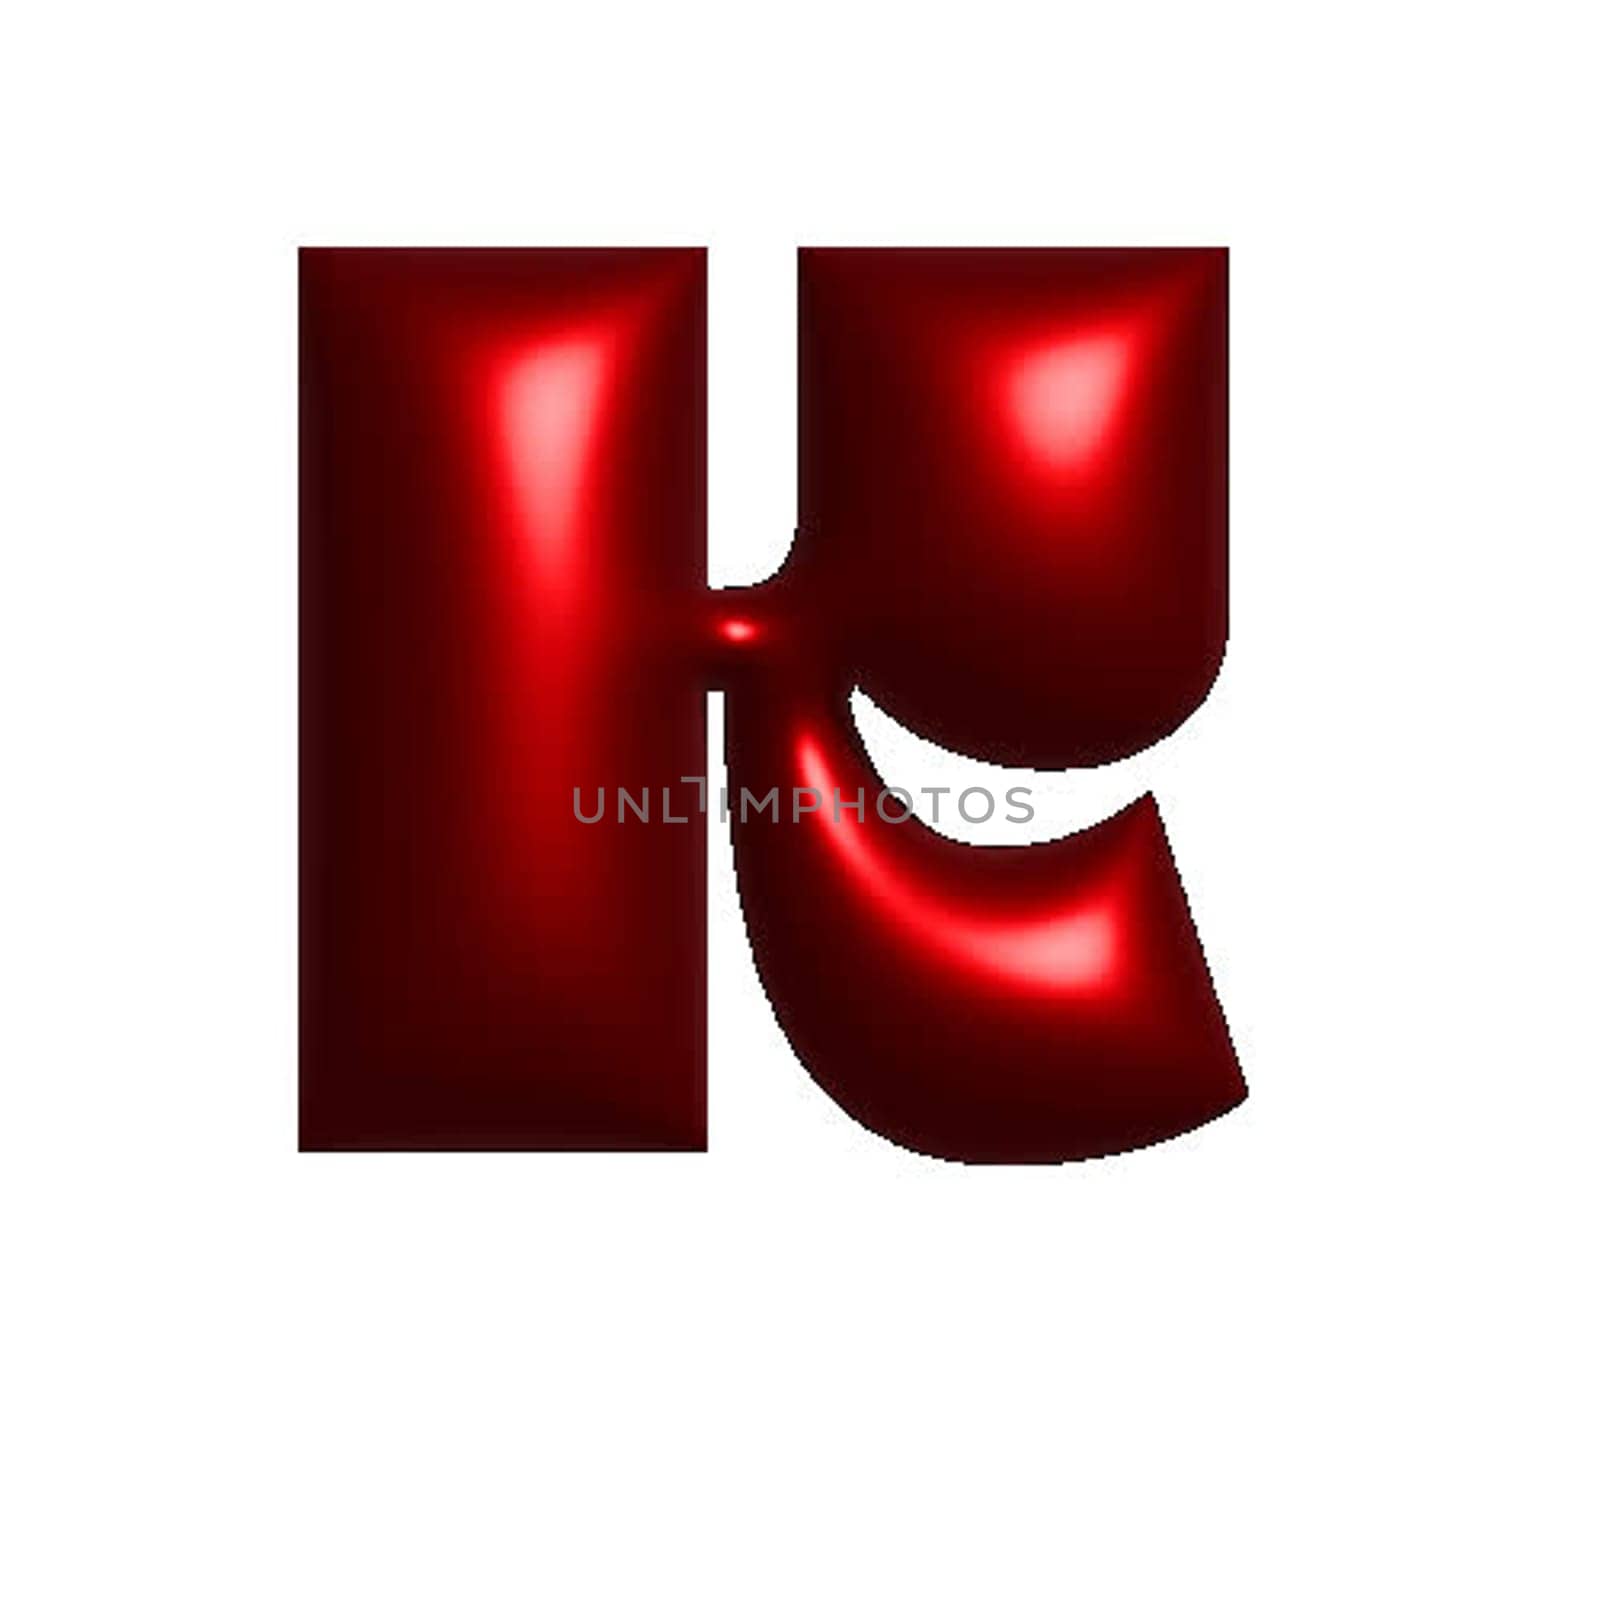 Red metal shiny reflective letter K 3D illustration by Dustick